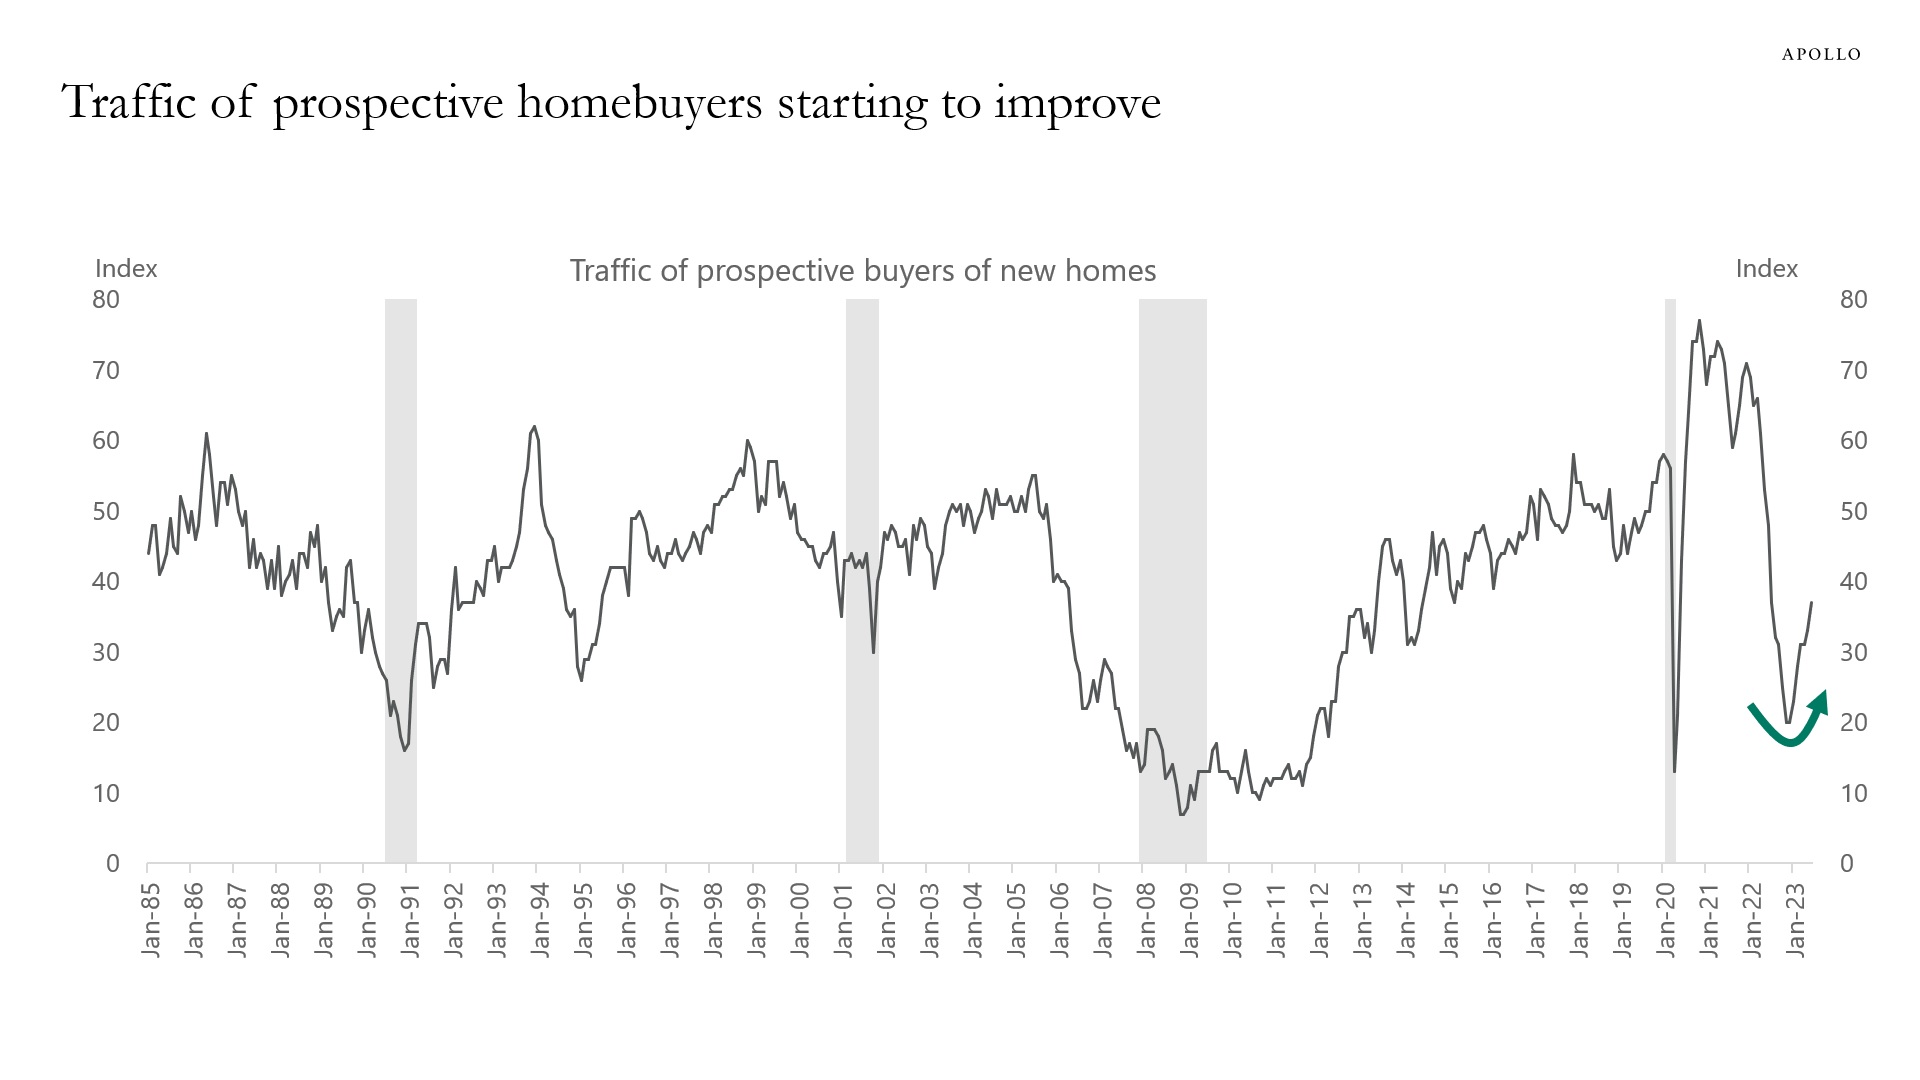 Homebuyer traffic is rebounding